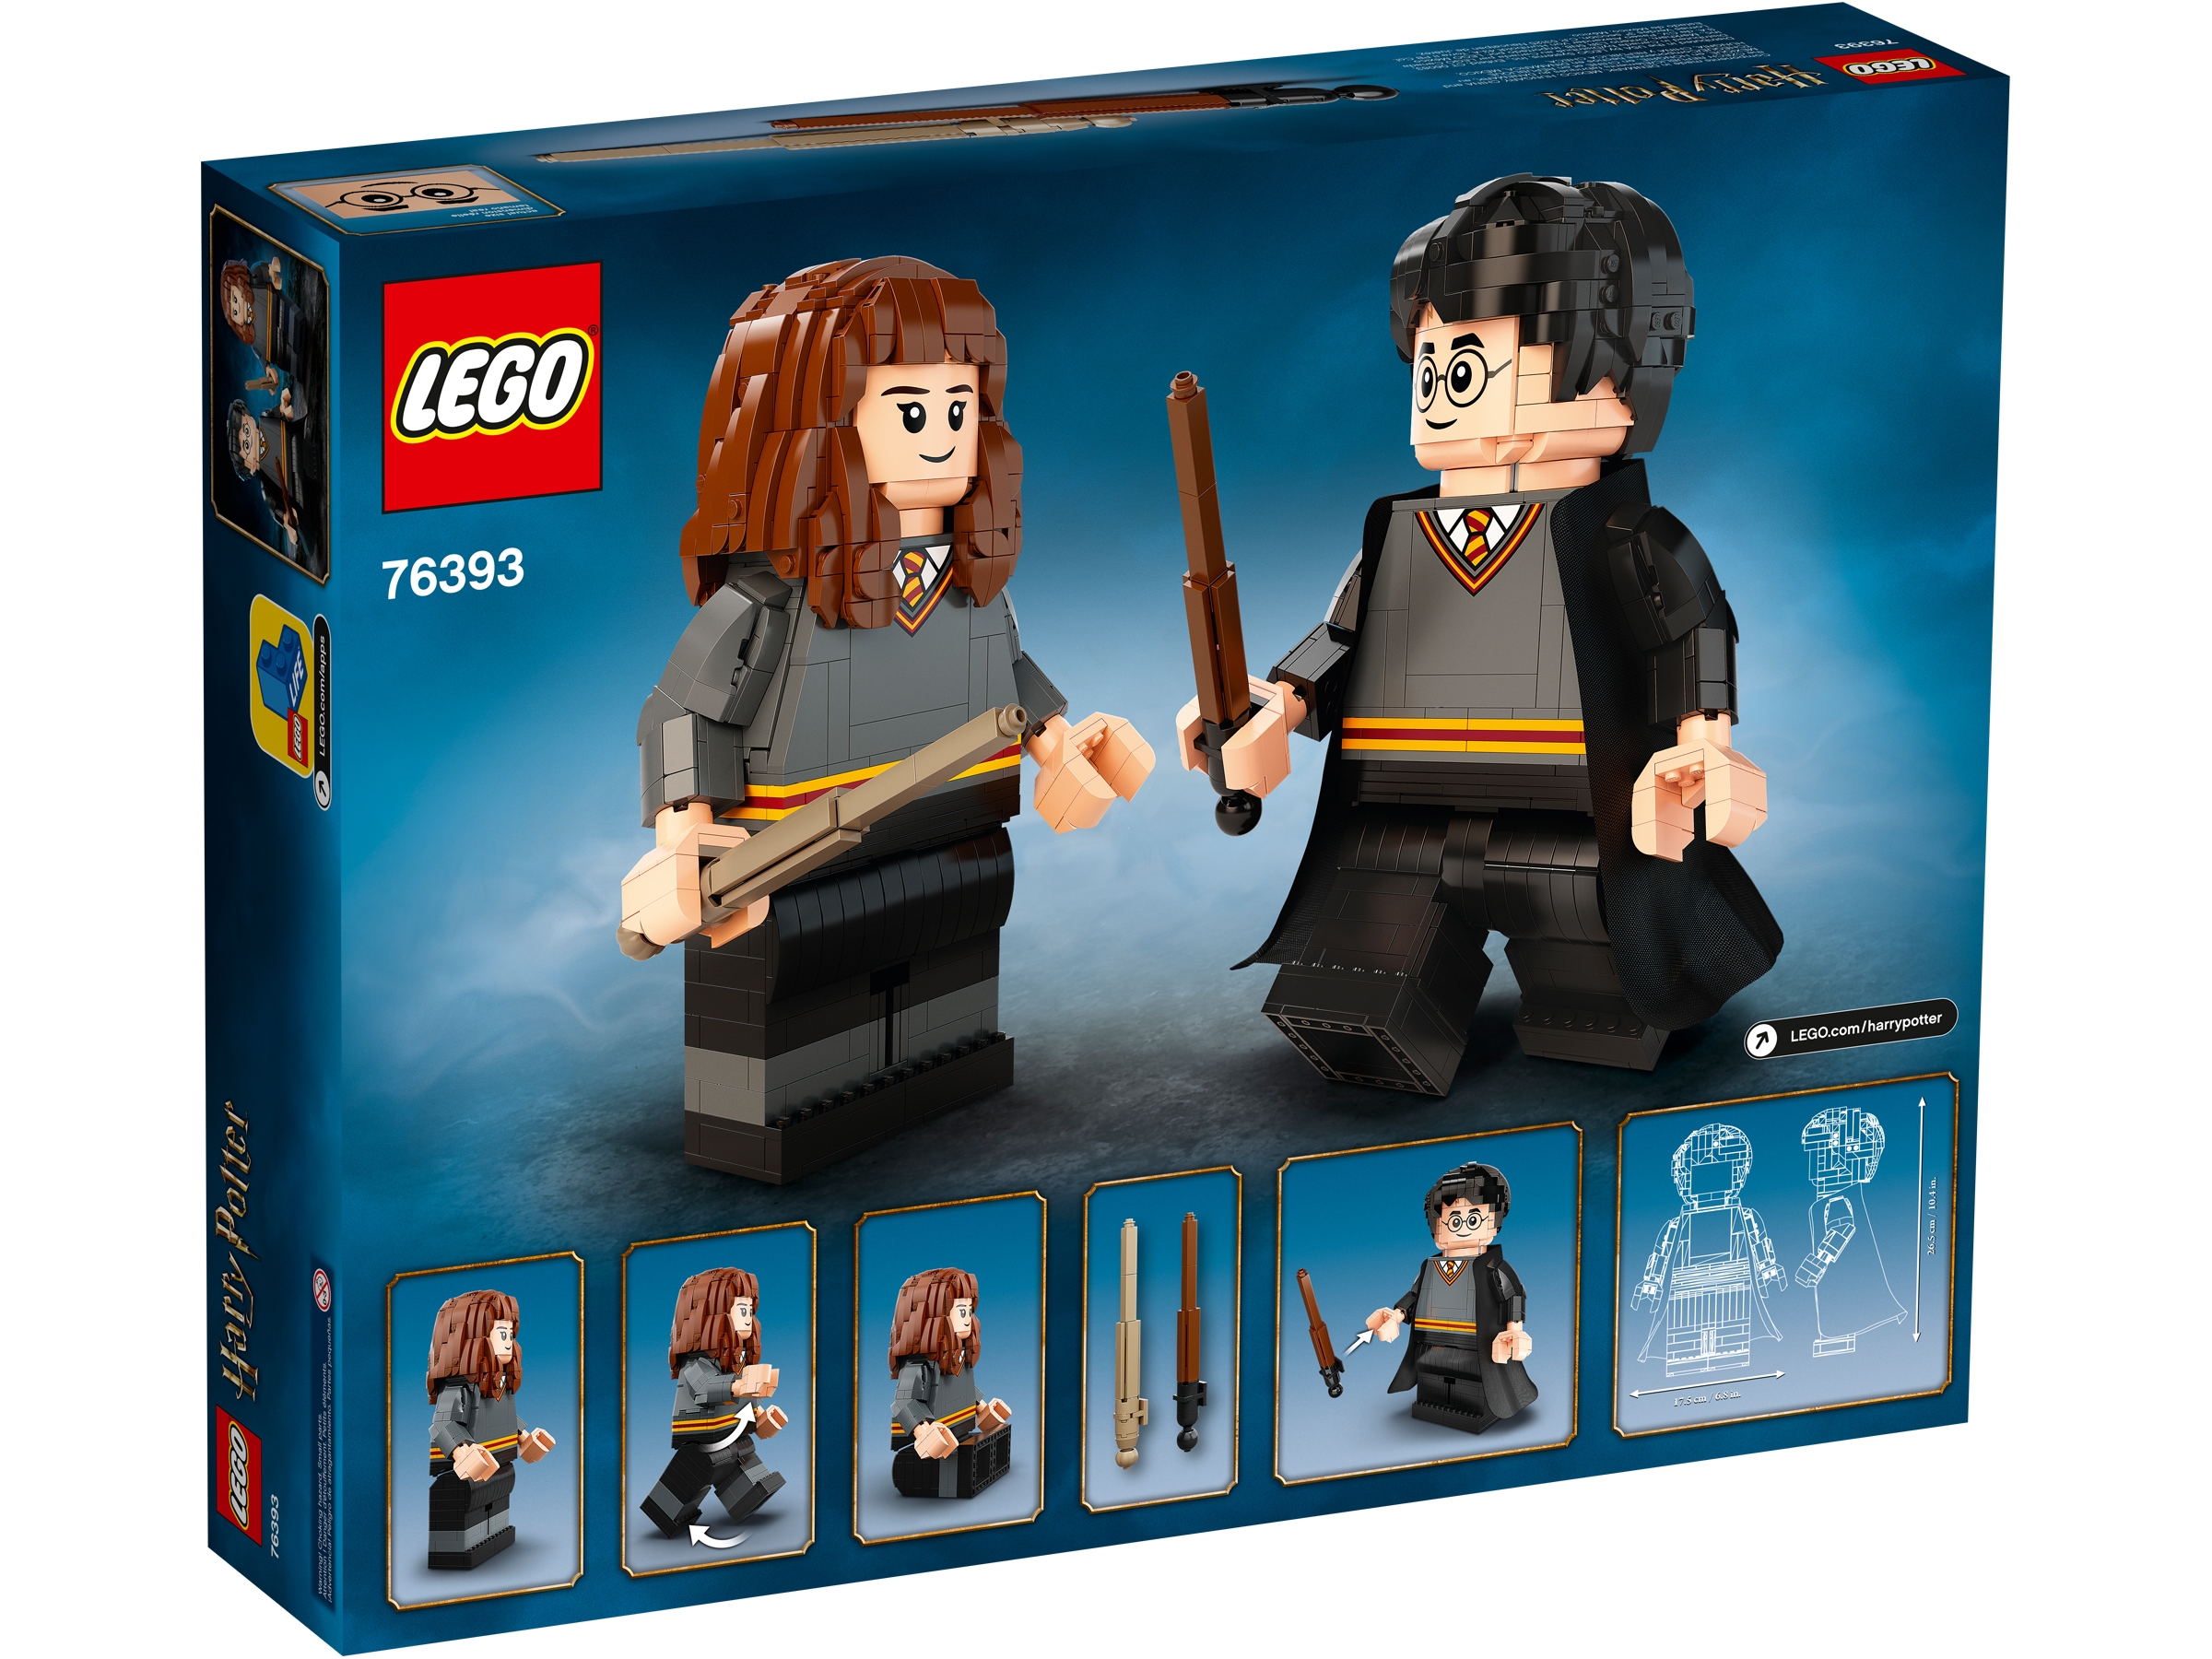 Genuine LEGOHarry Potter Hermione Granger Minifigure w/ wand 75956/75953/75954 